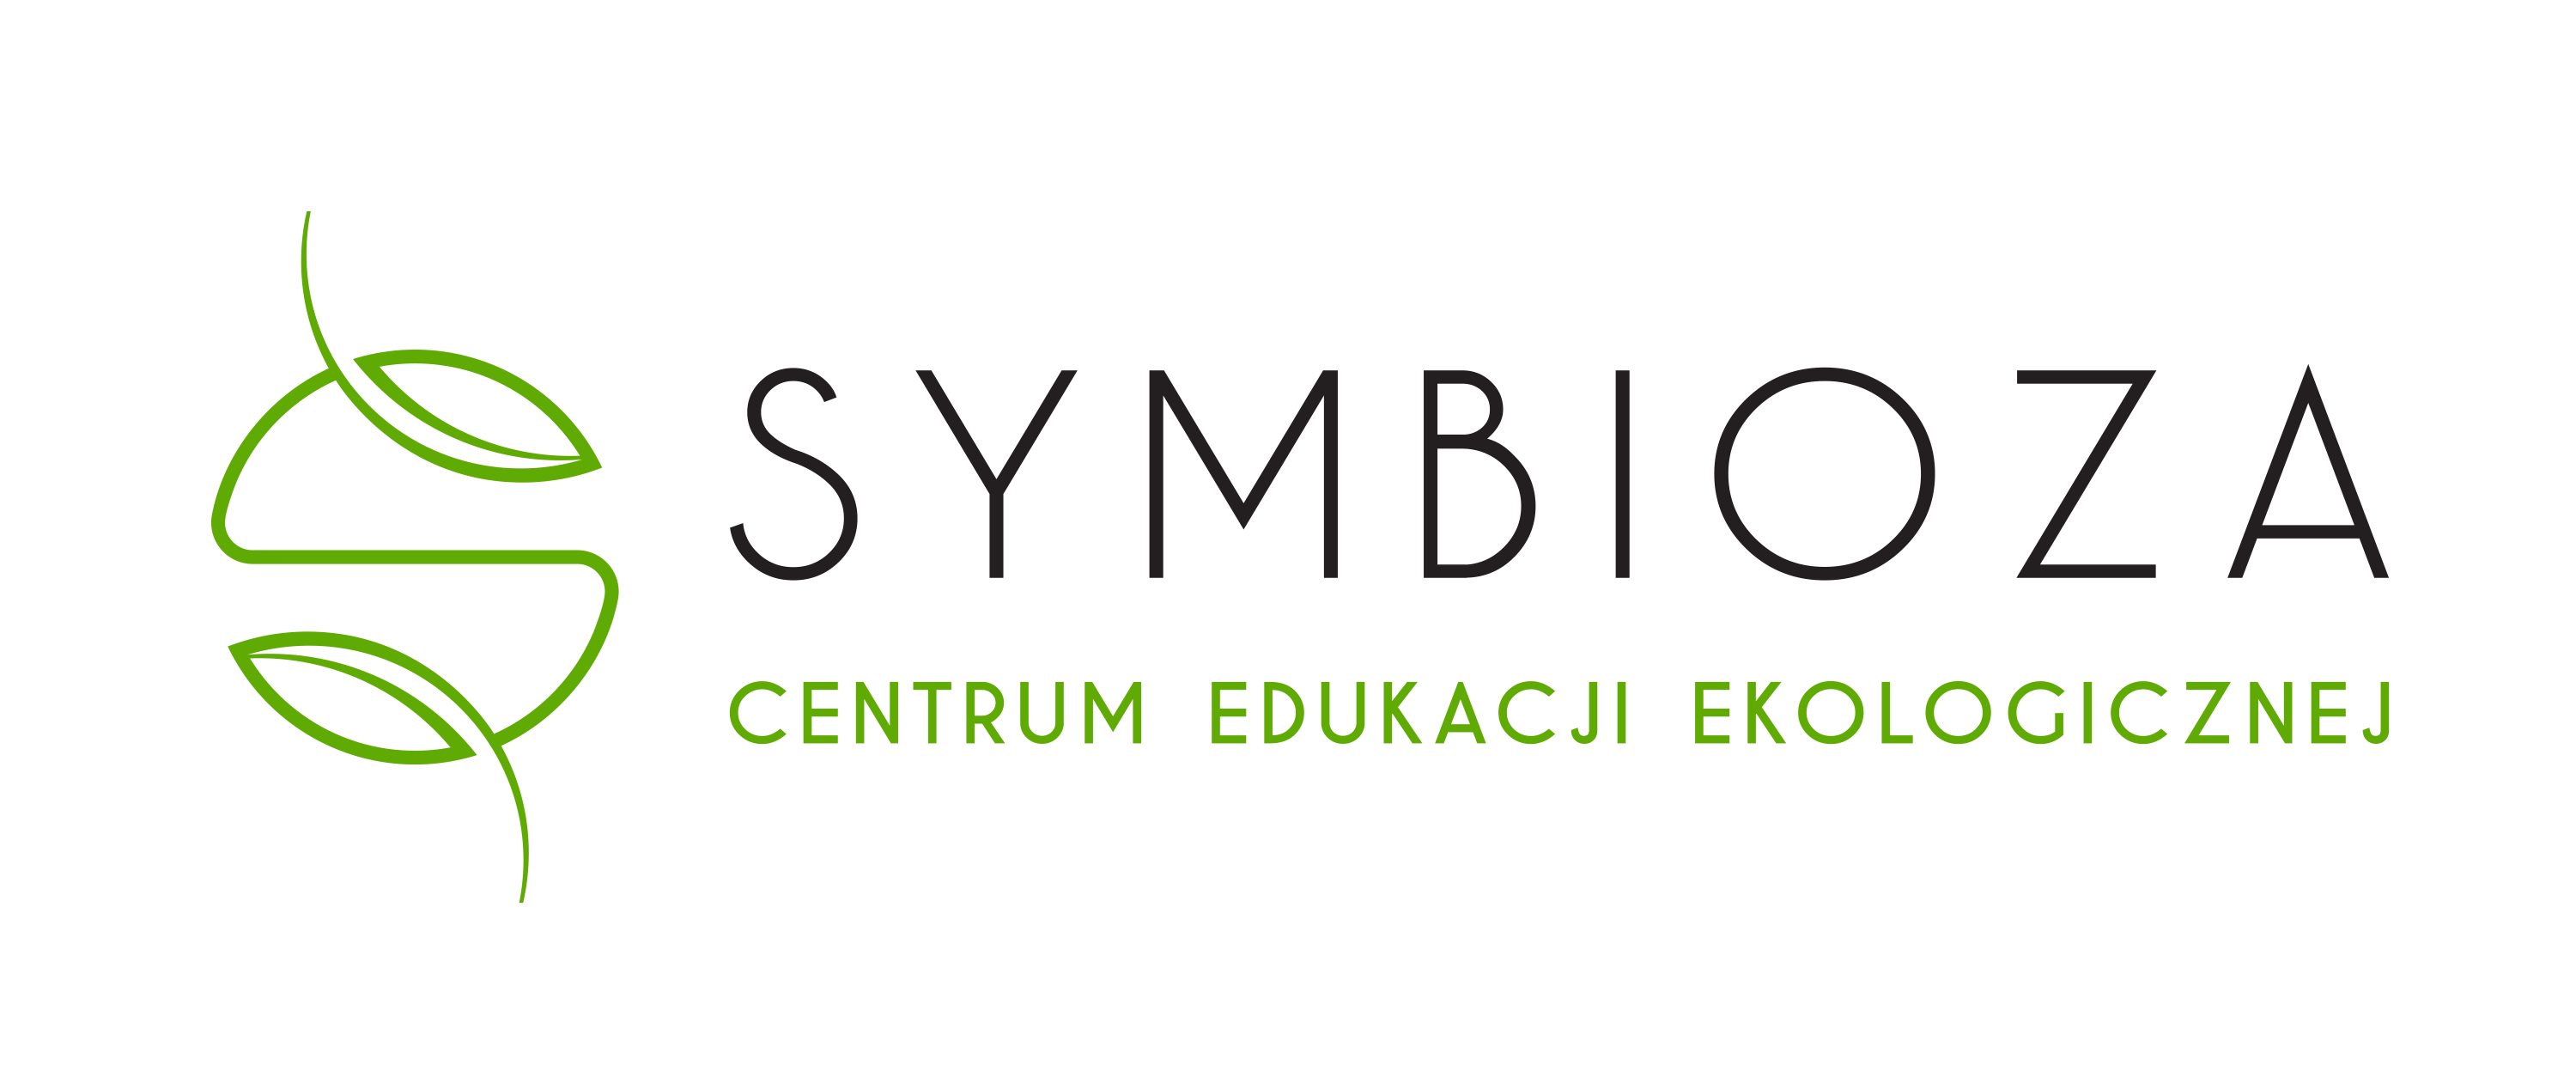 Symbiosis Center for Ecological Education in Krakow